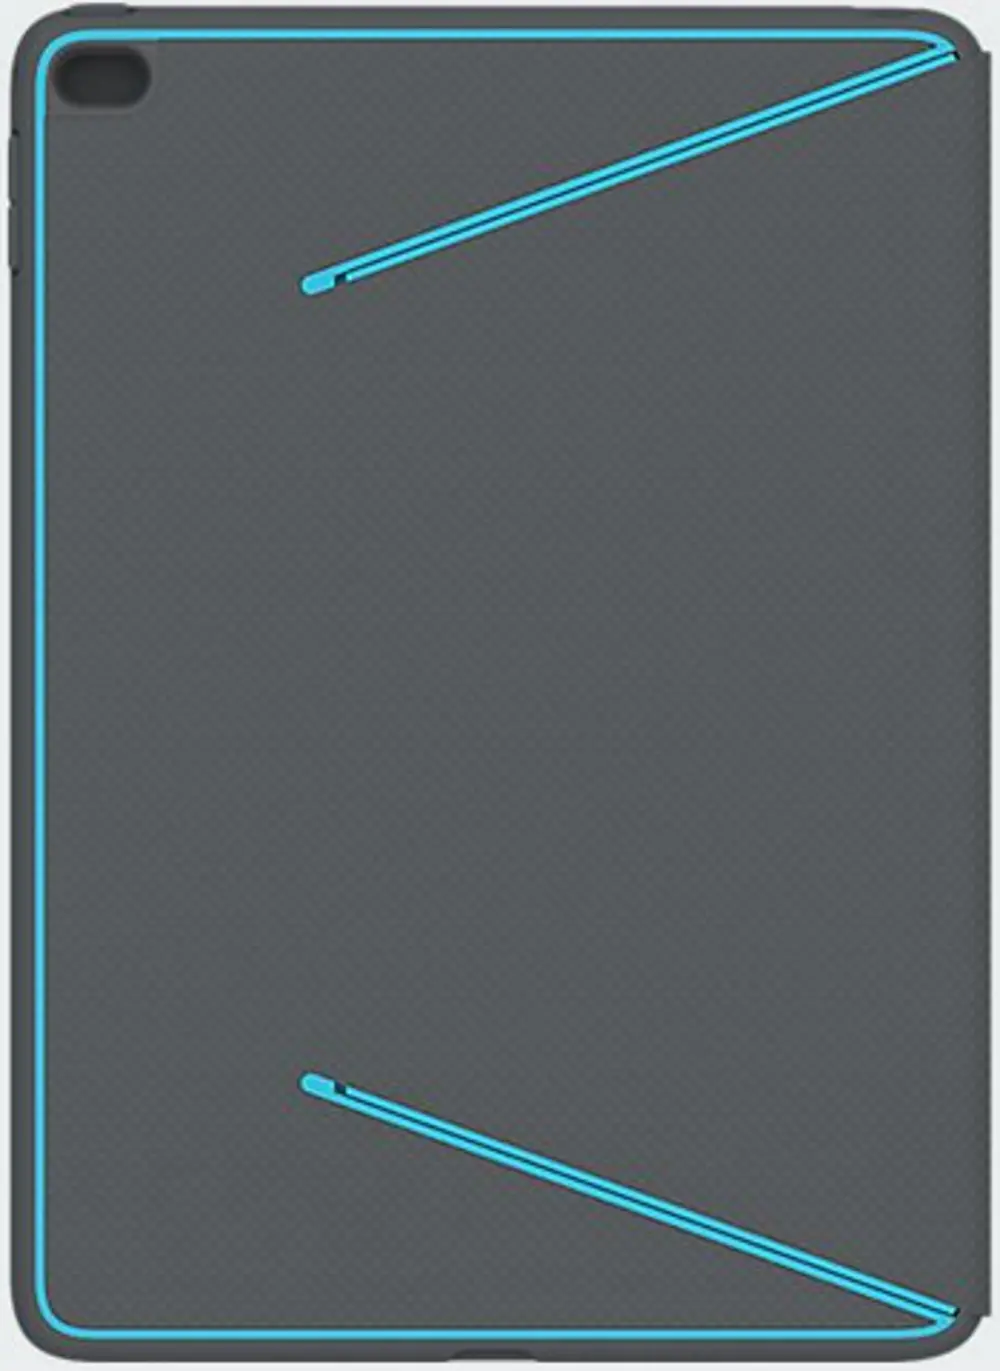 Speck DuraFolio Case for iPad Air 2 - Slate Gray-1